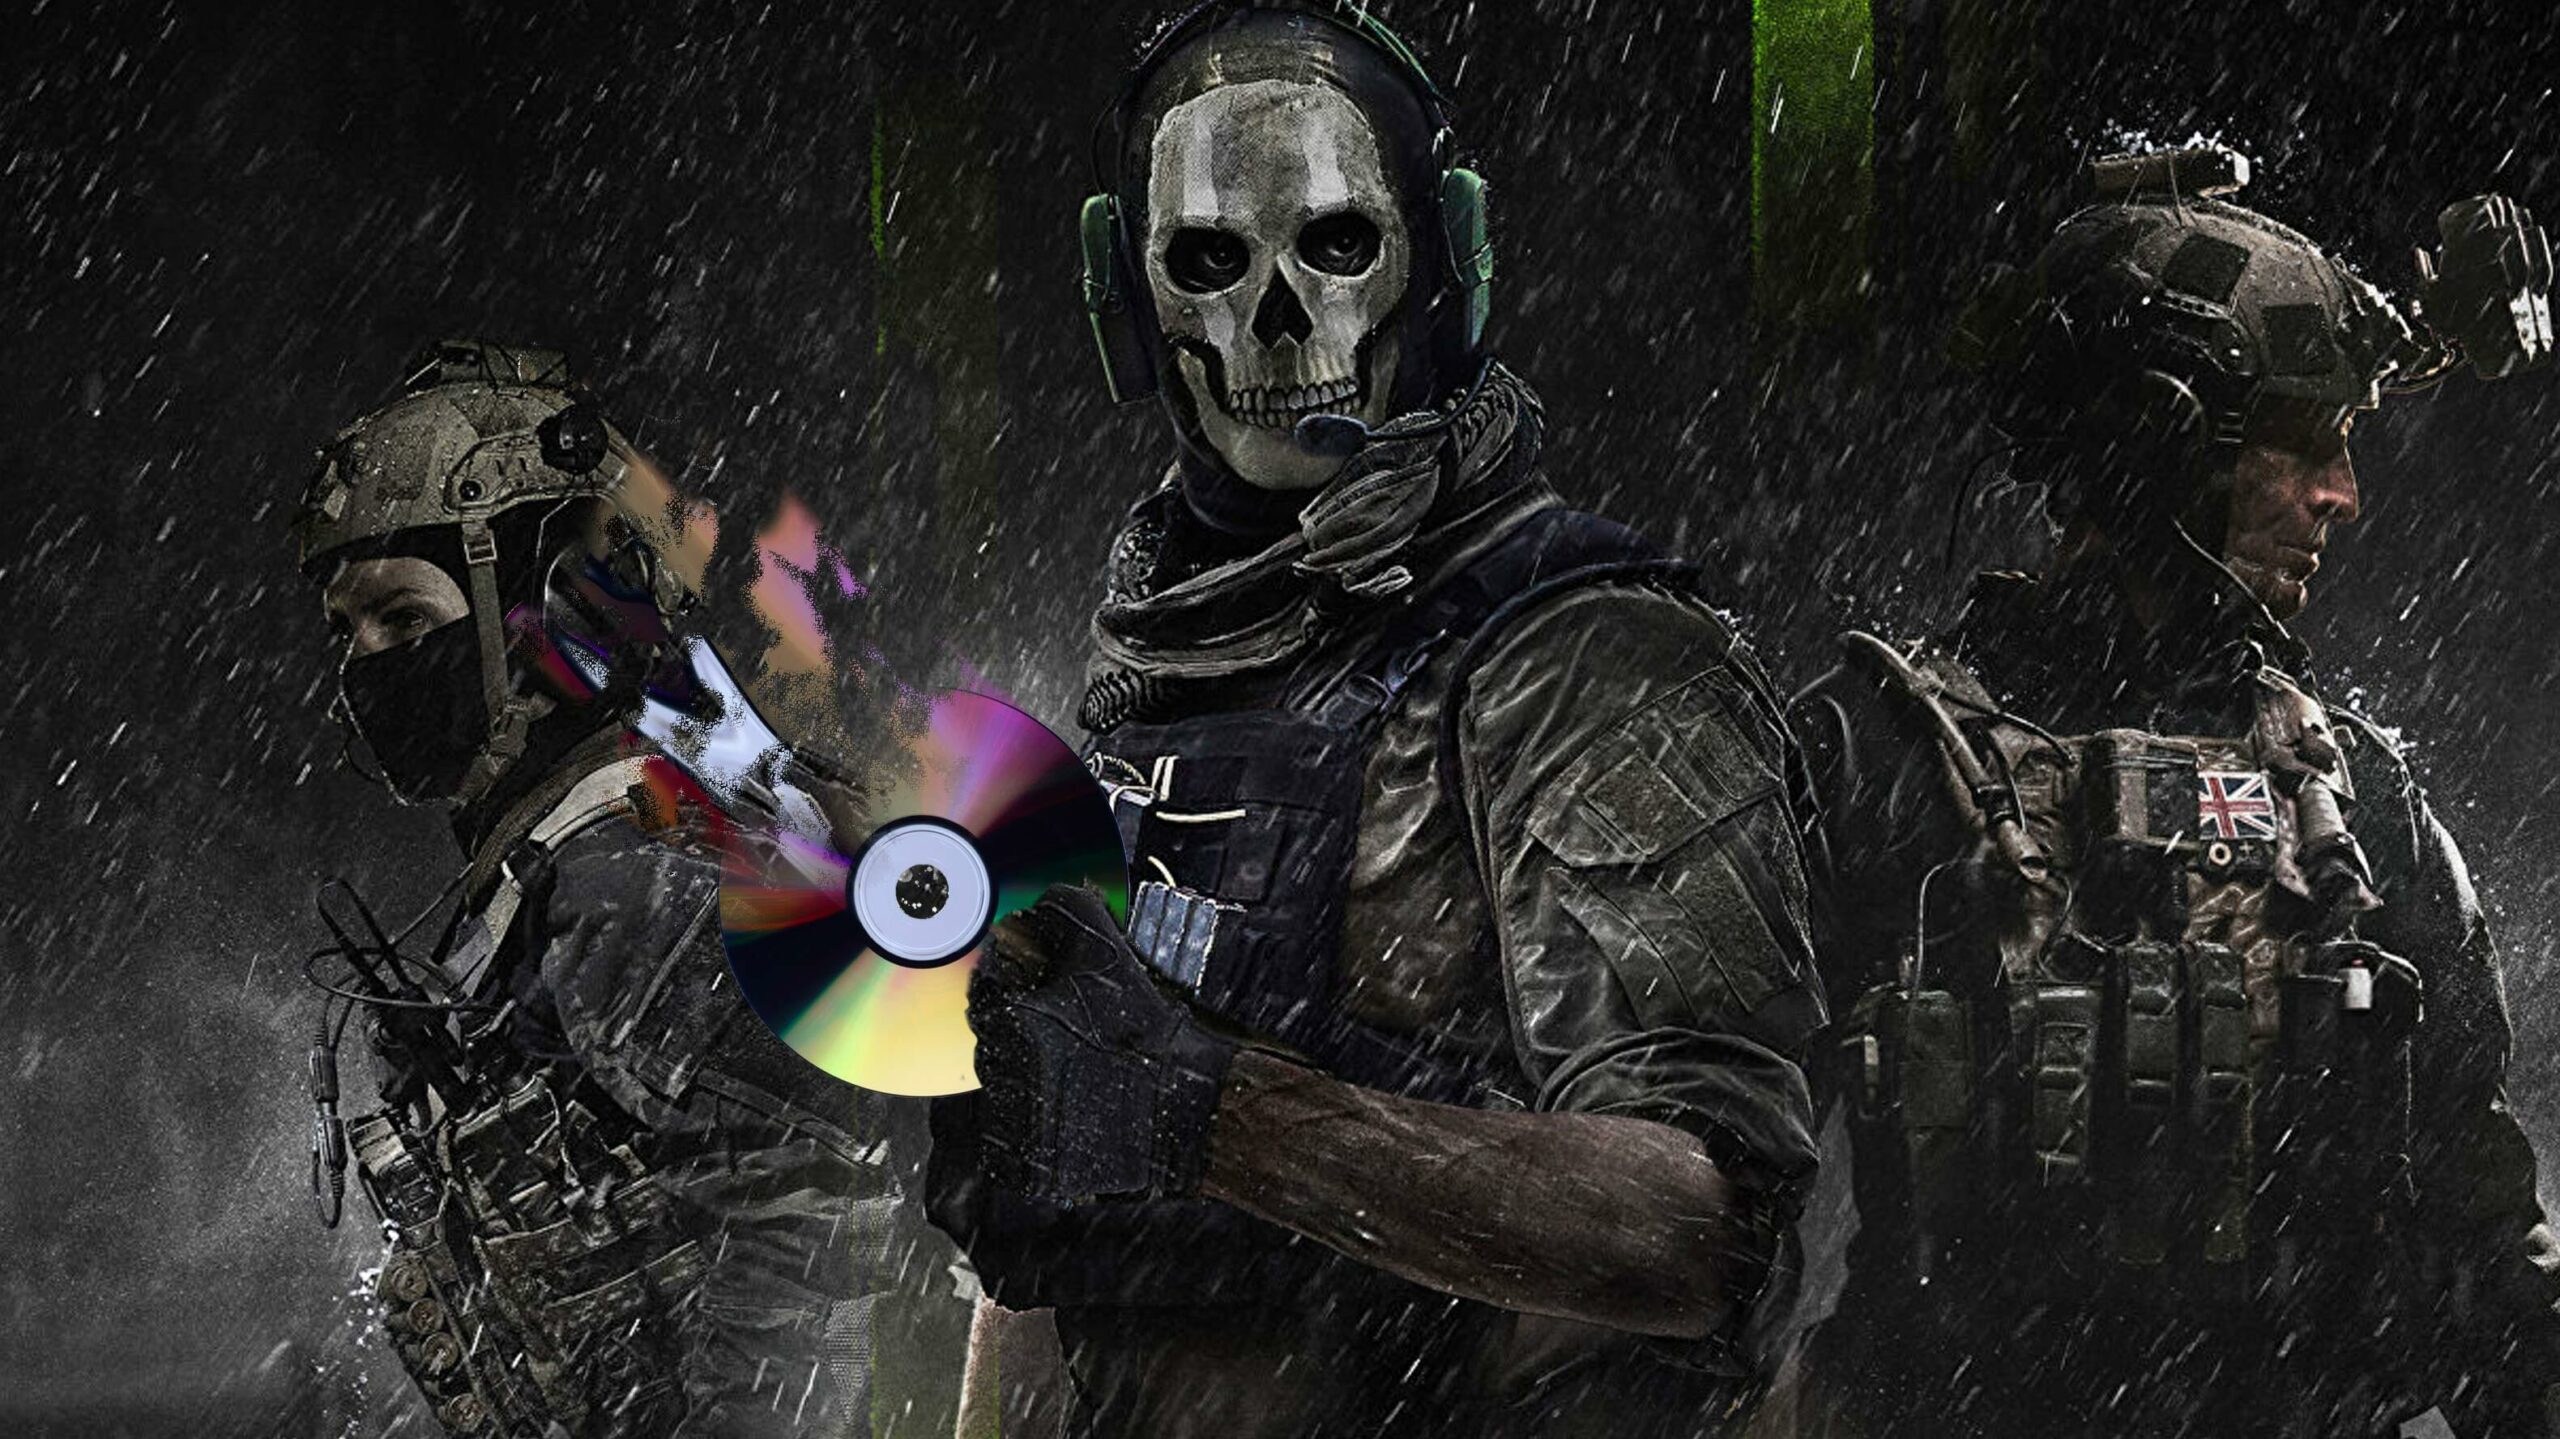 Call of Duty: Modern Warfare 2 disc will still require a 150GB